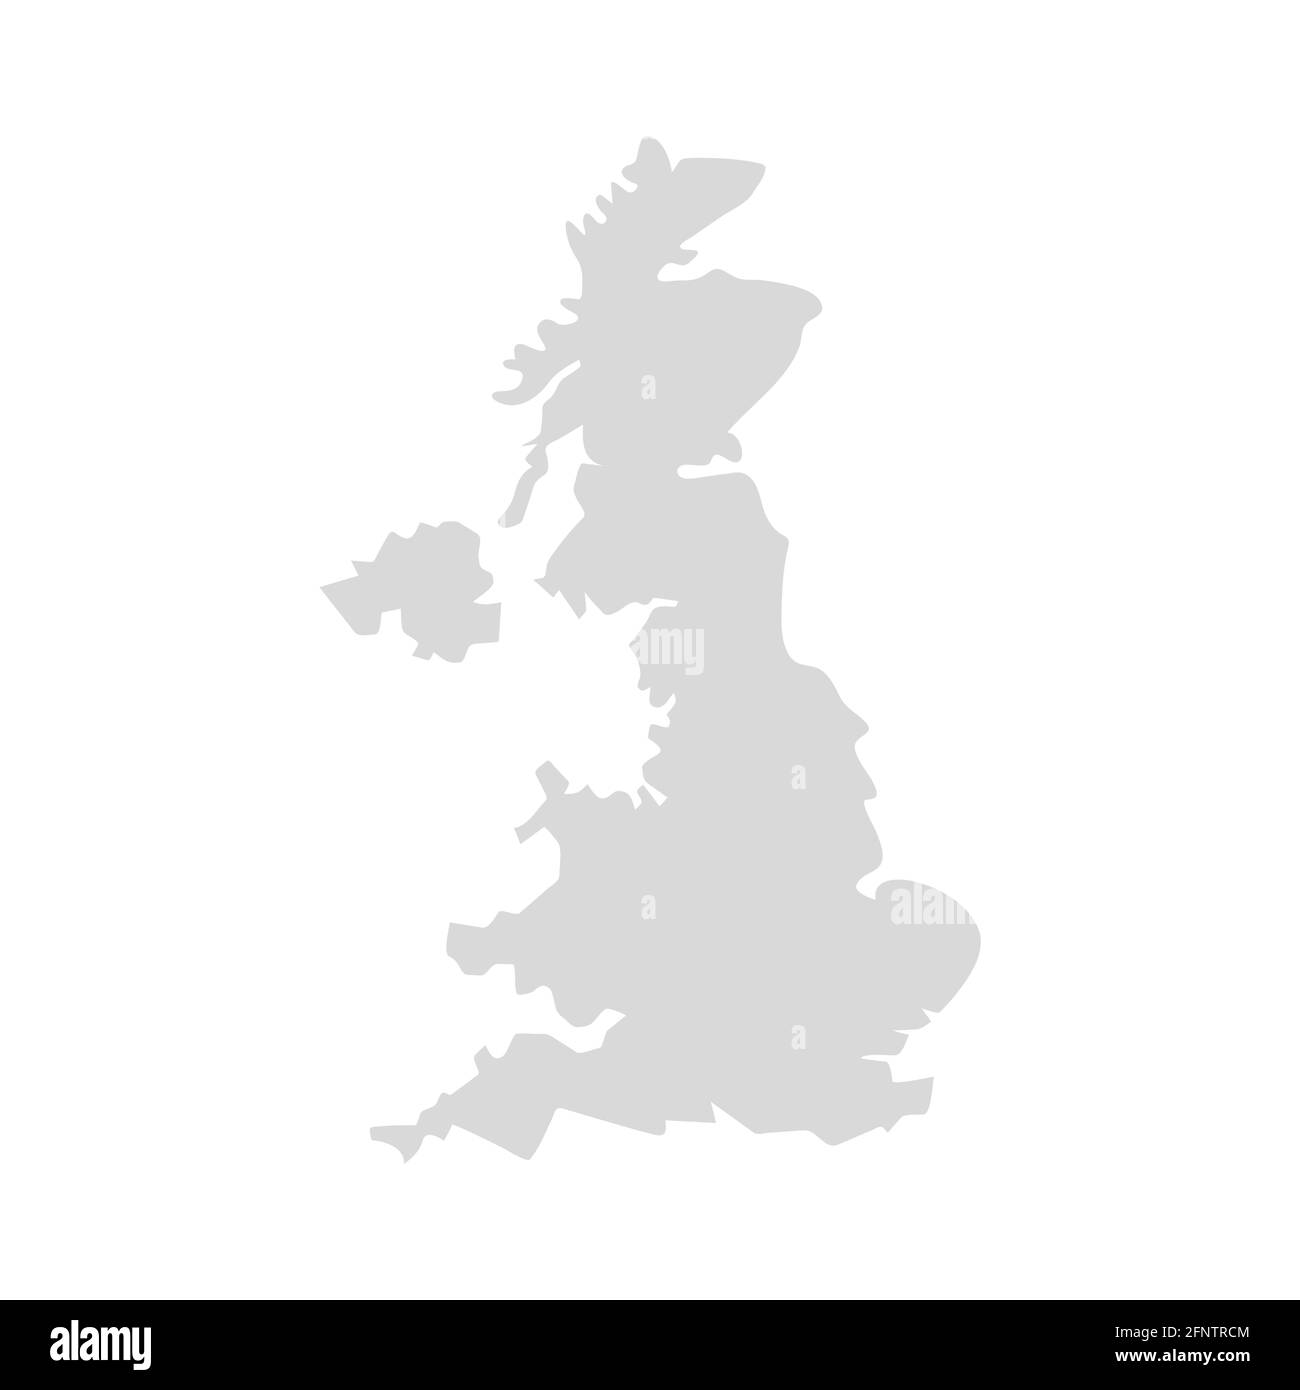 United Kingdom county vector region map. UK east region ireland simple vector map Stock Vector